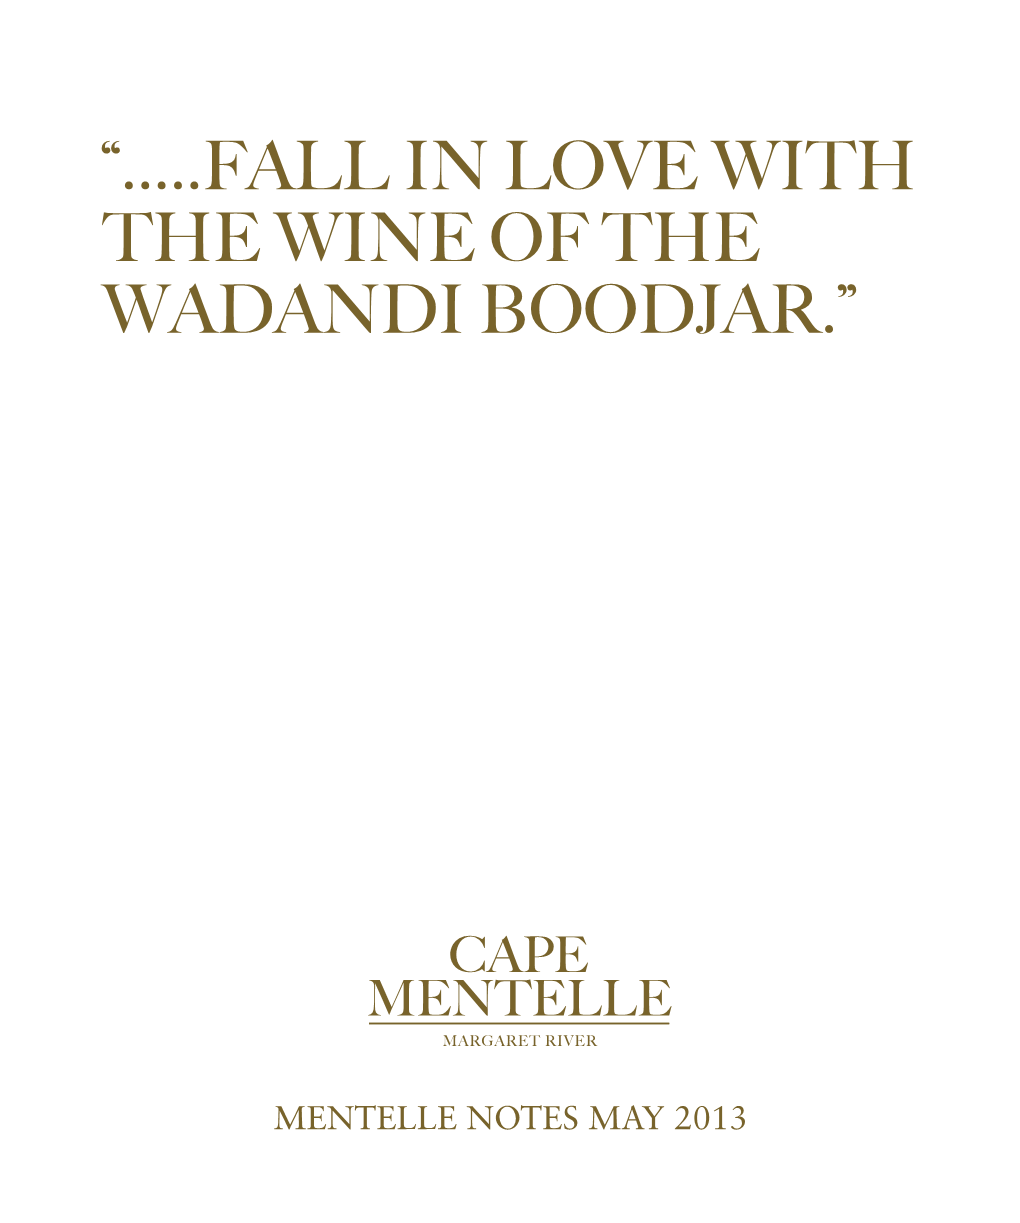 “...Fall in Love with the Wine of the Wadandi Boodjar.”